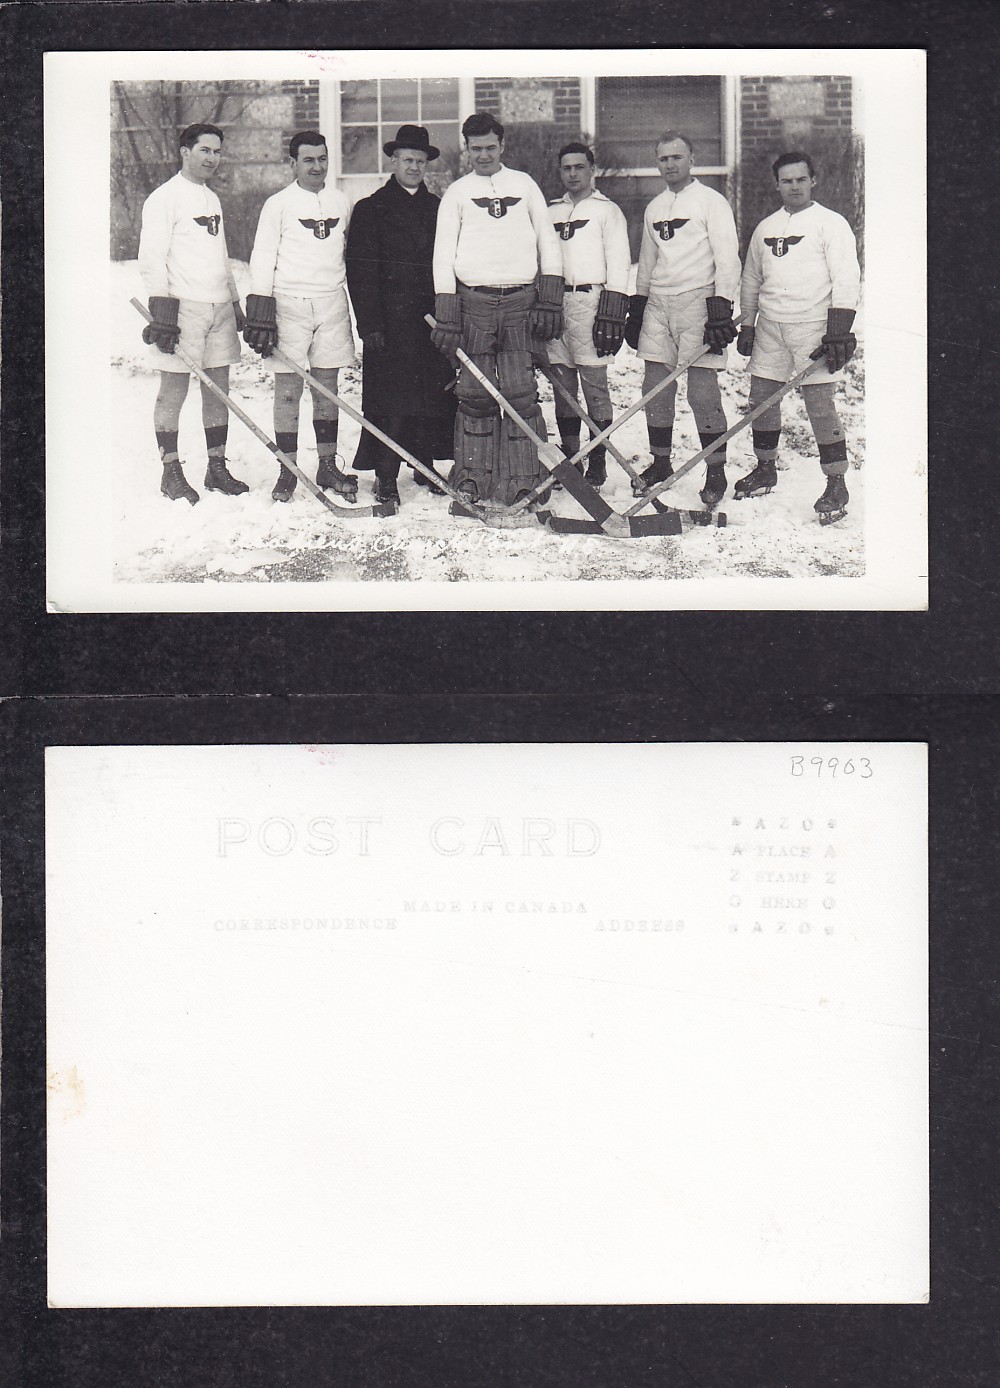 1910'S HOCKEY TEAM POST CARD photo